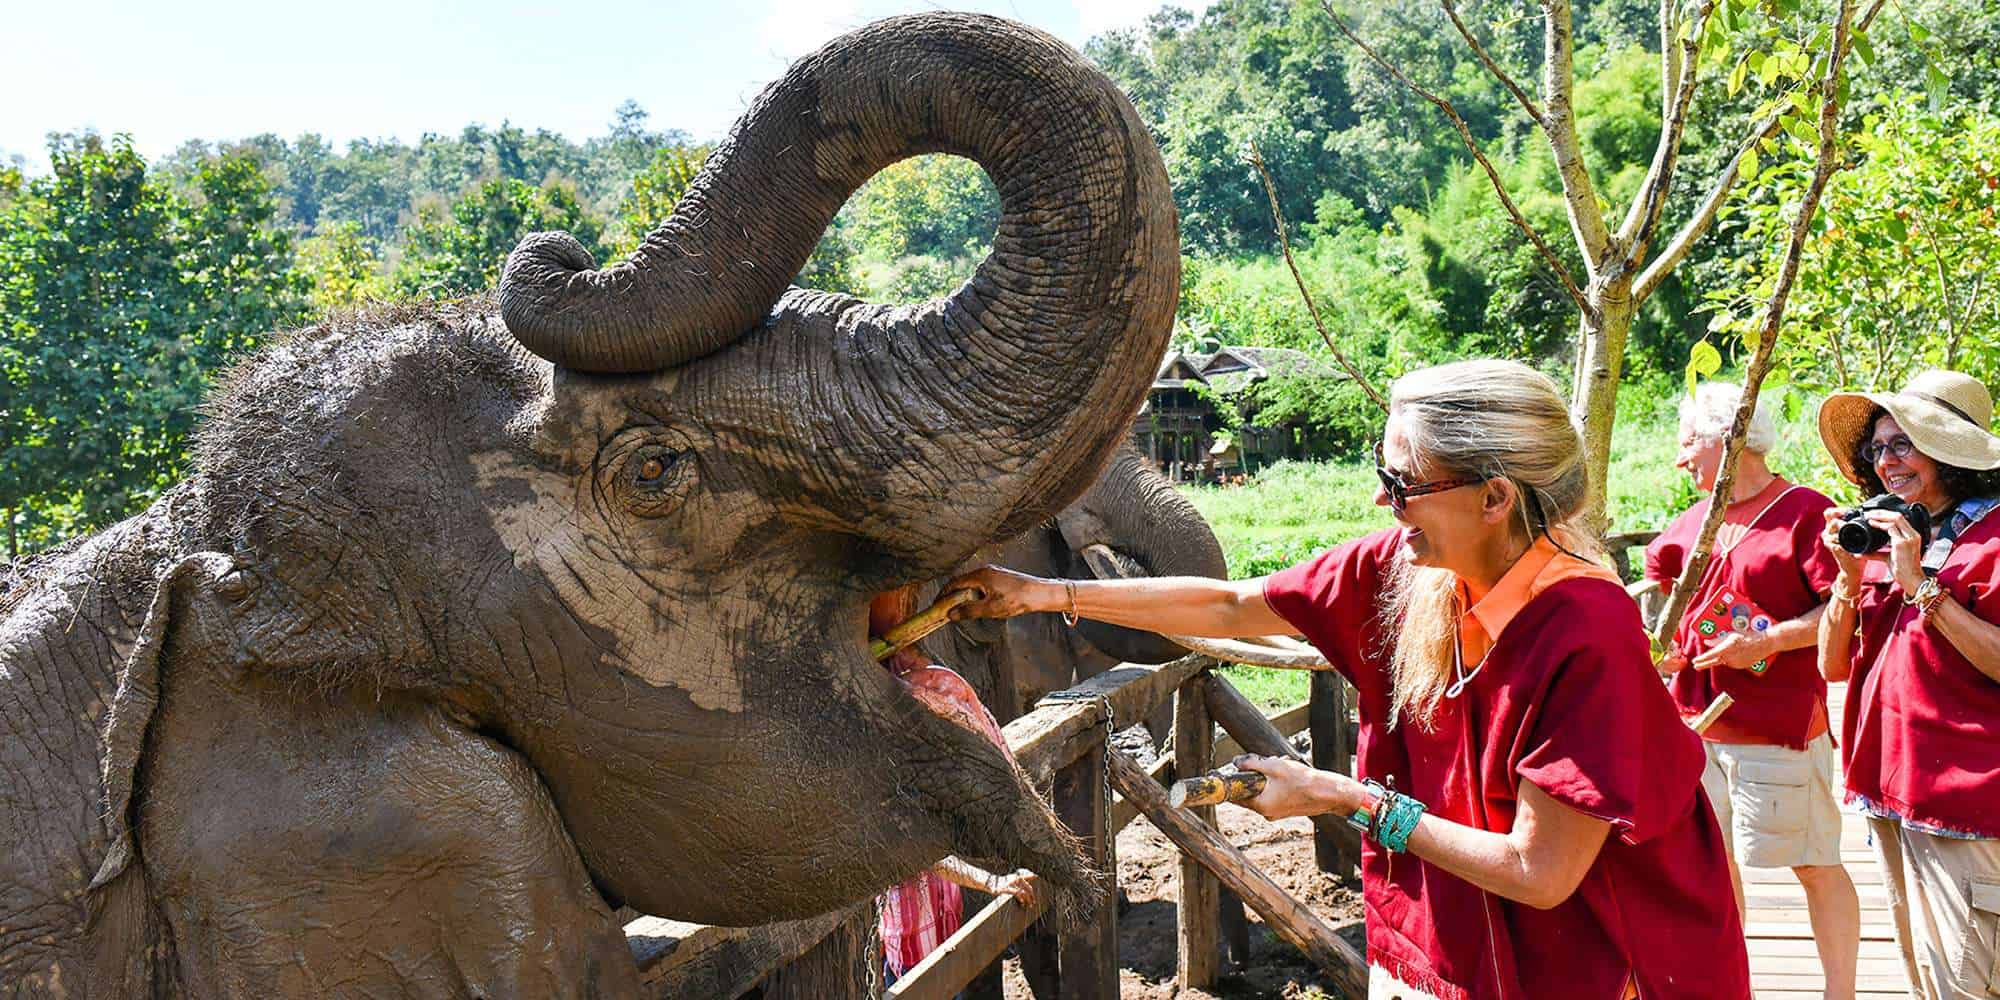 Walk with elephants - happy woman feeding an elephant at Elephant EcoValley.